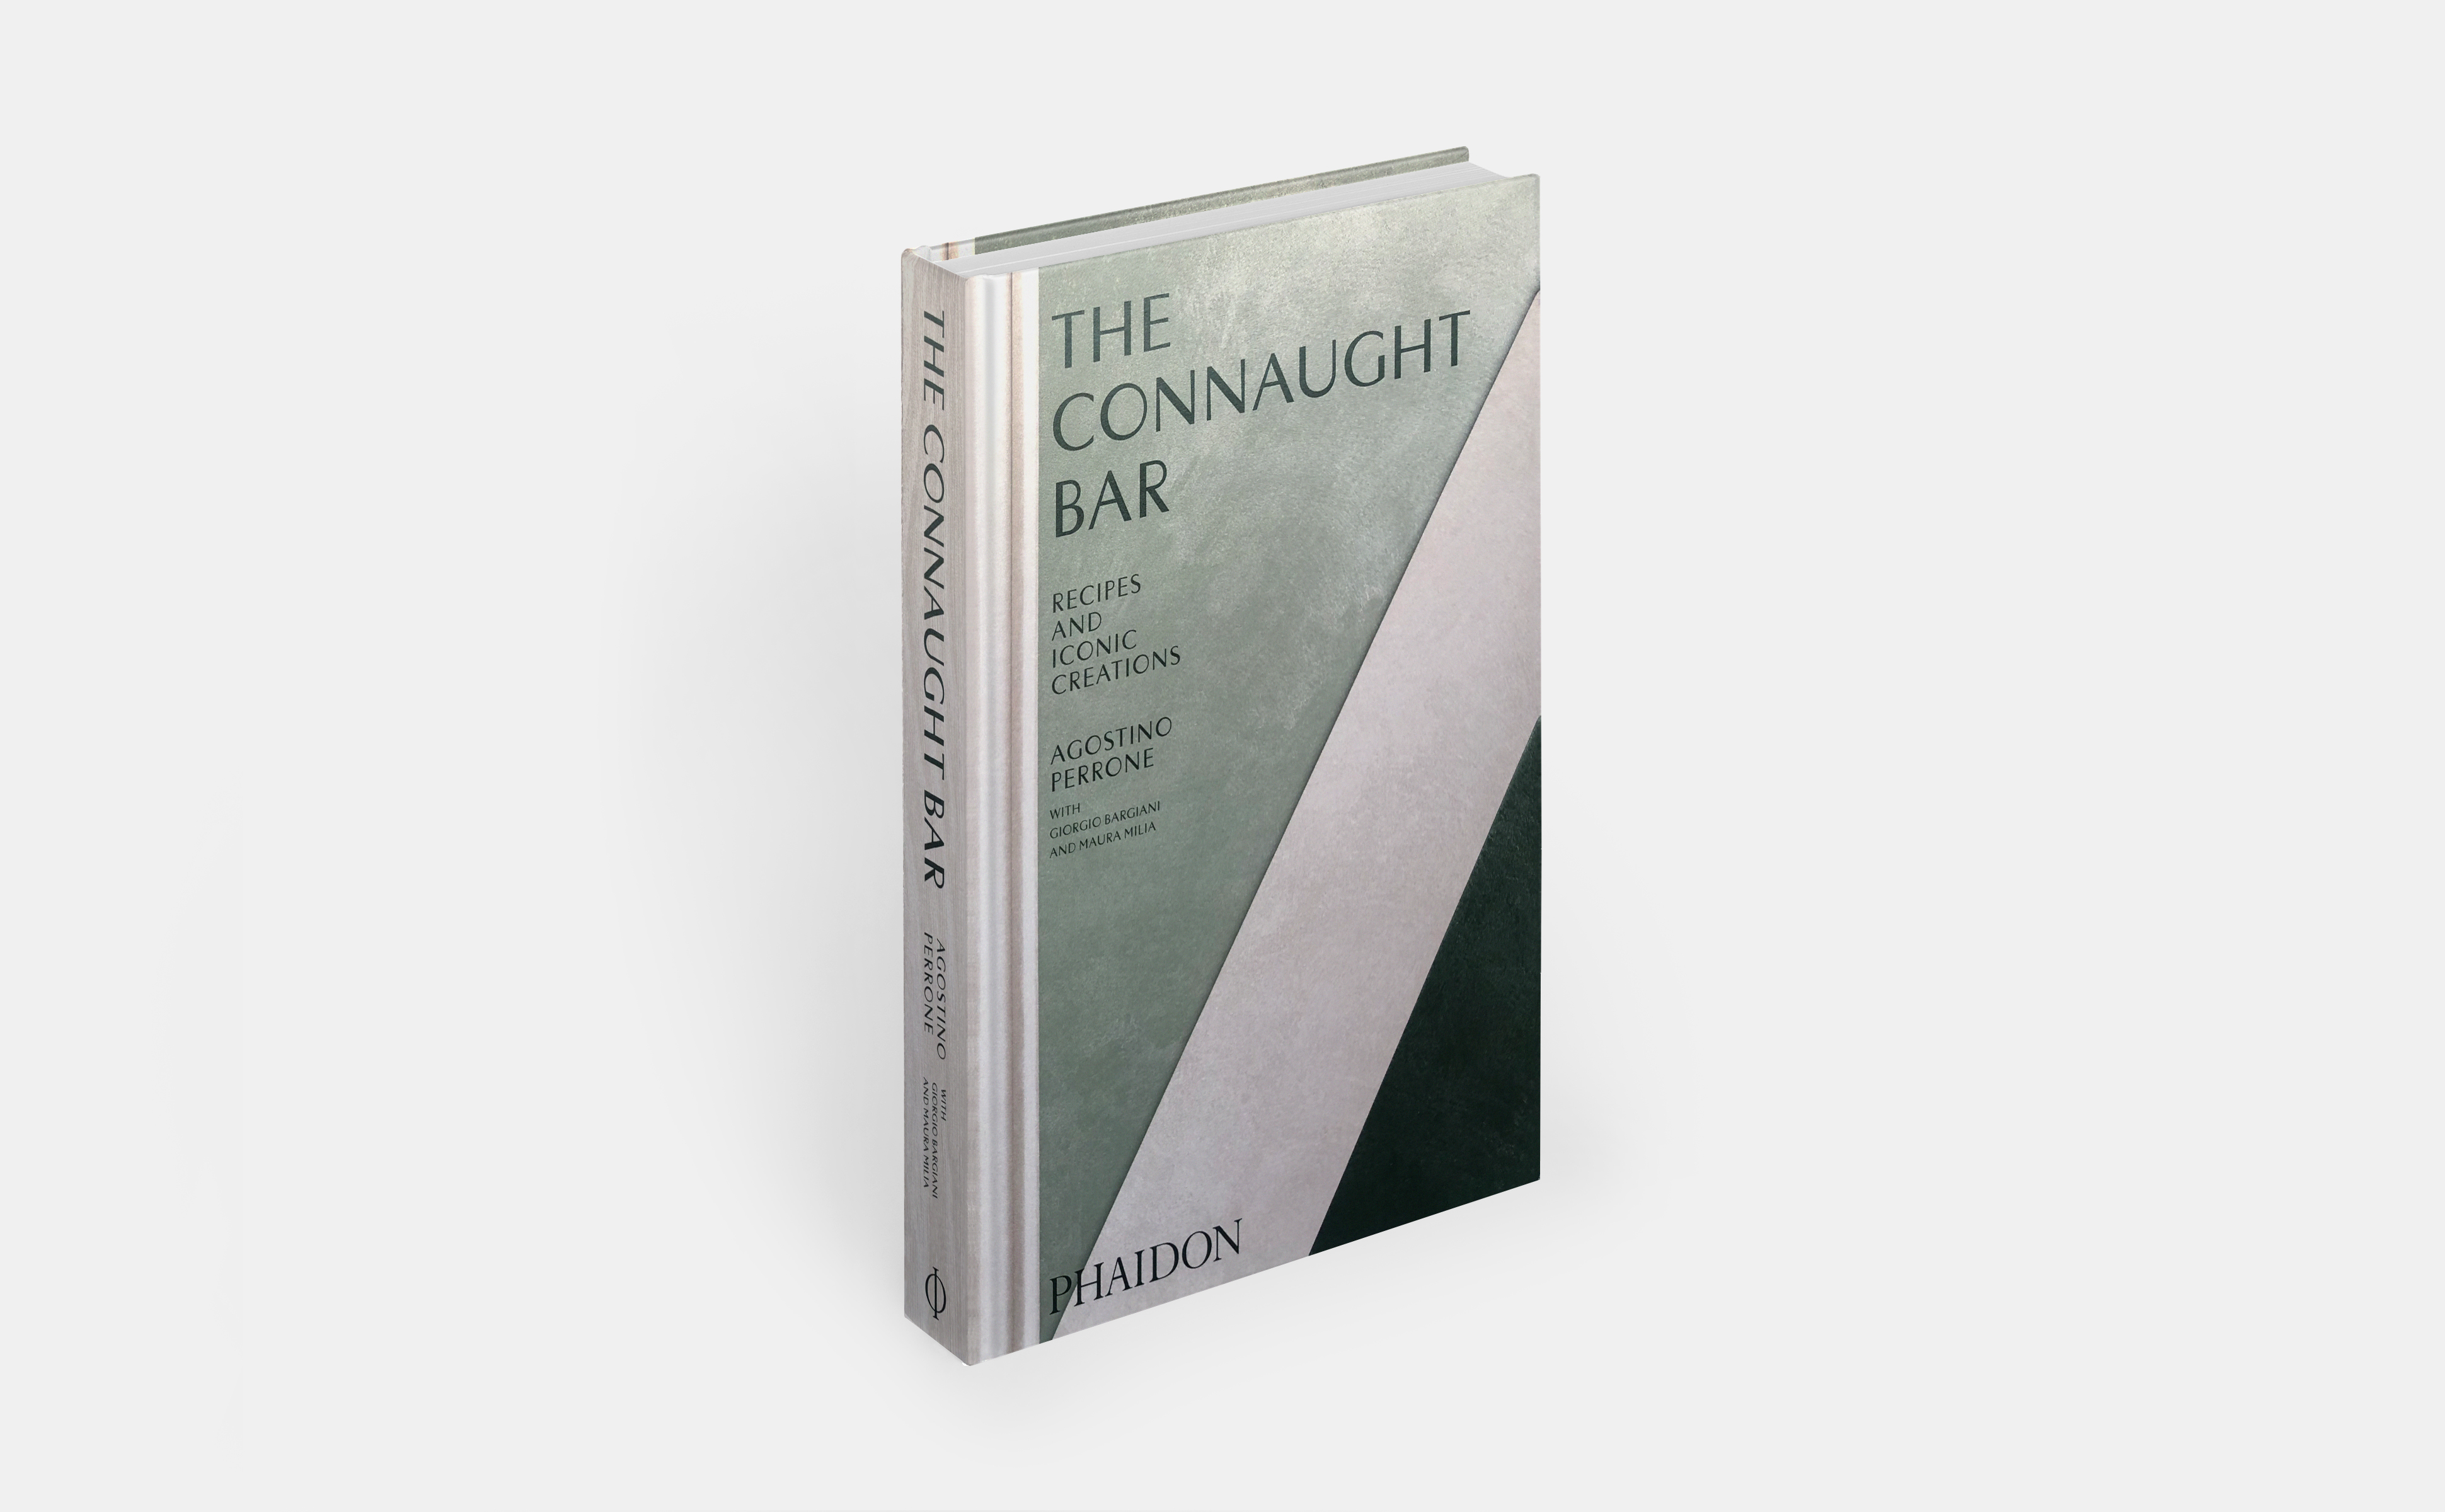 The Connaught Bar recipe book